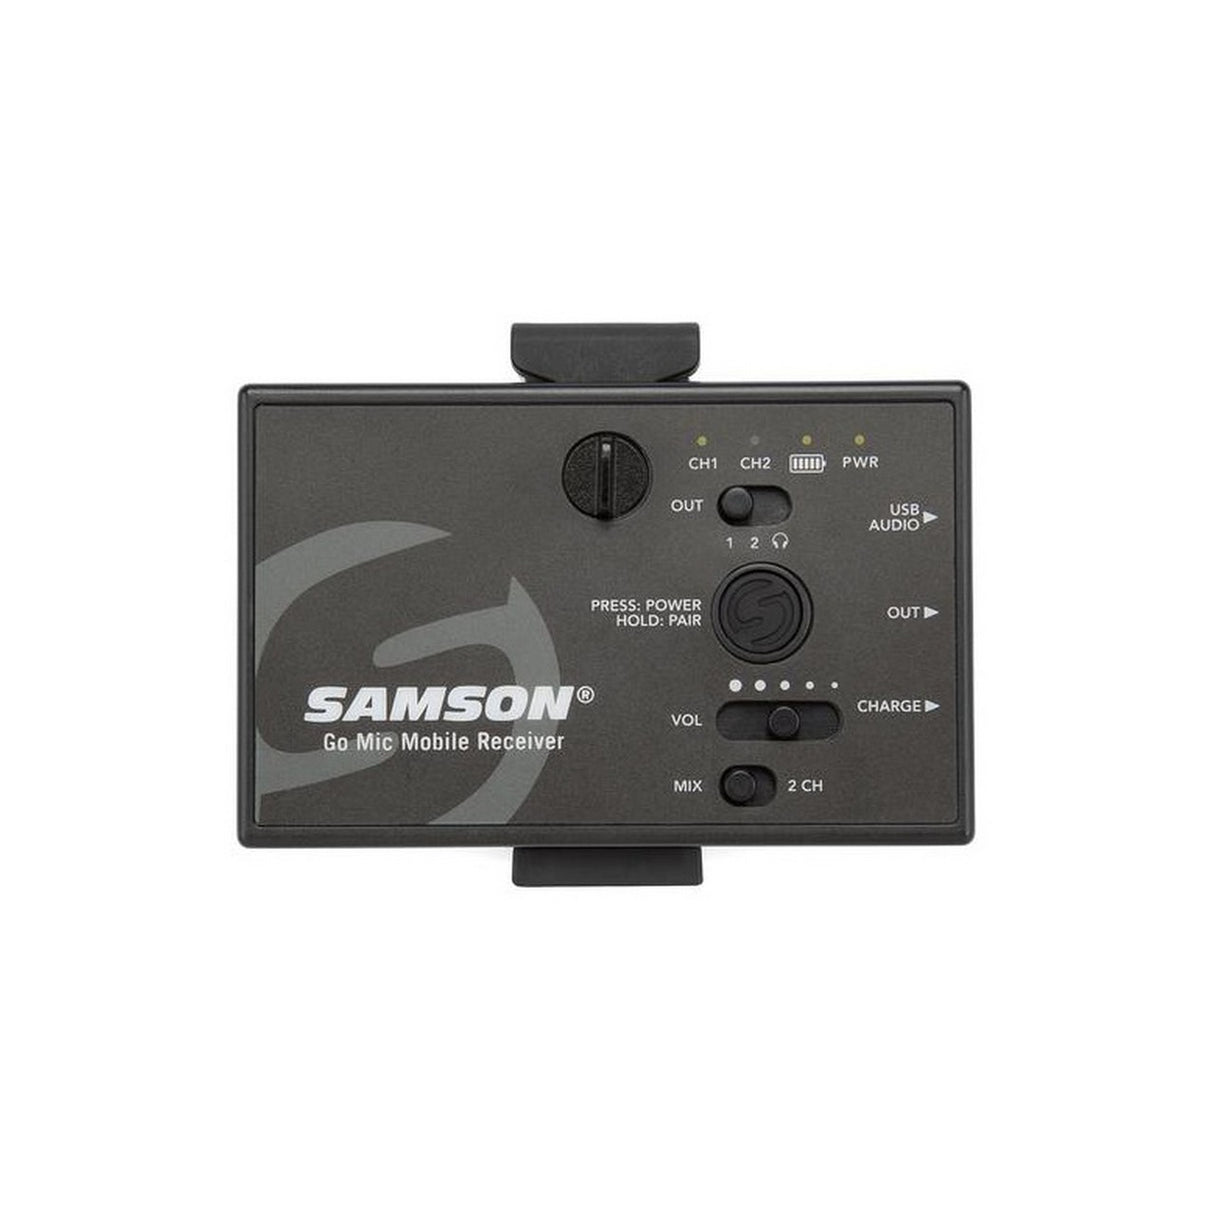 Samson Go Mic Mobile Digital Handheld Q8 Microphone System